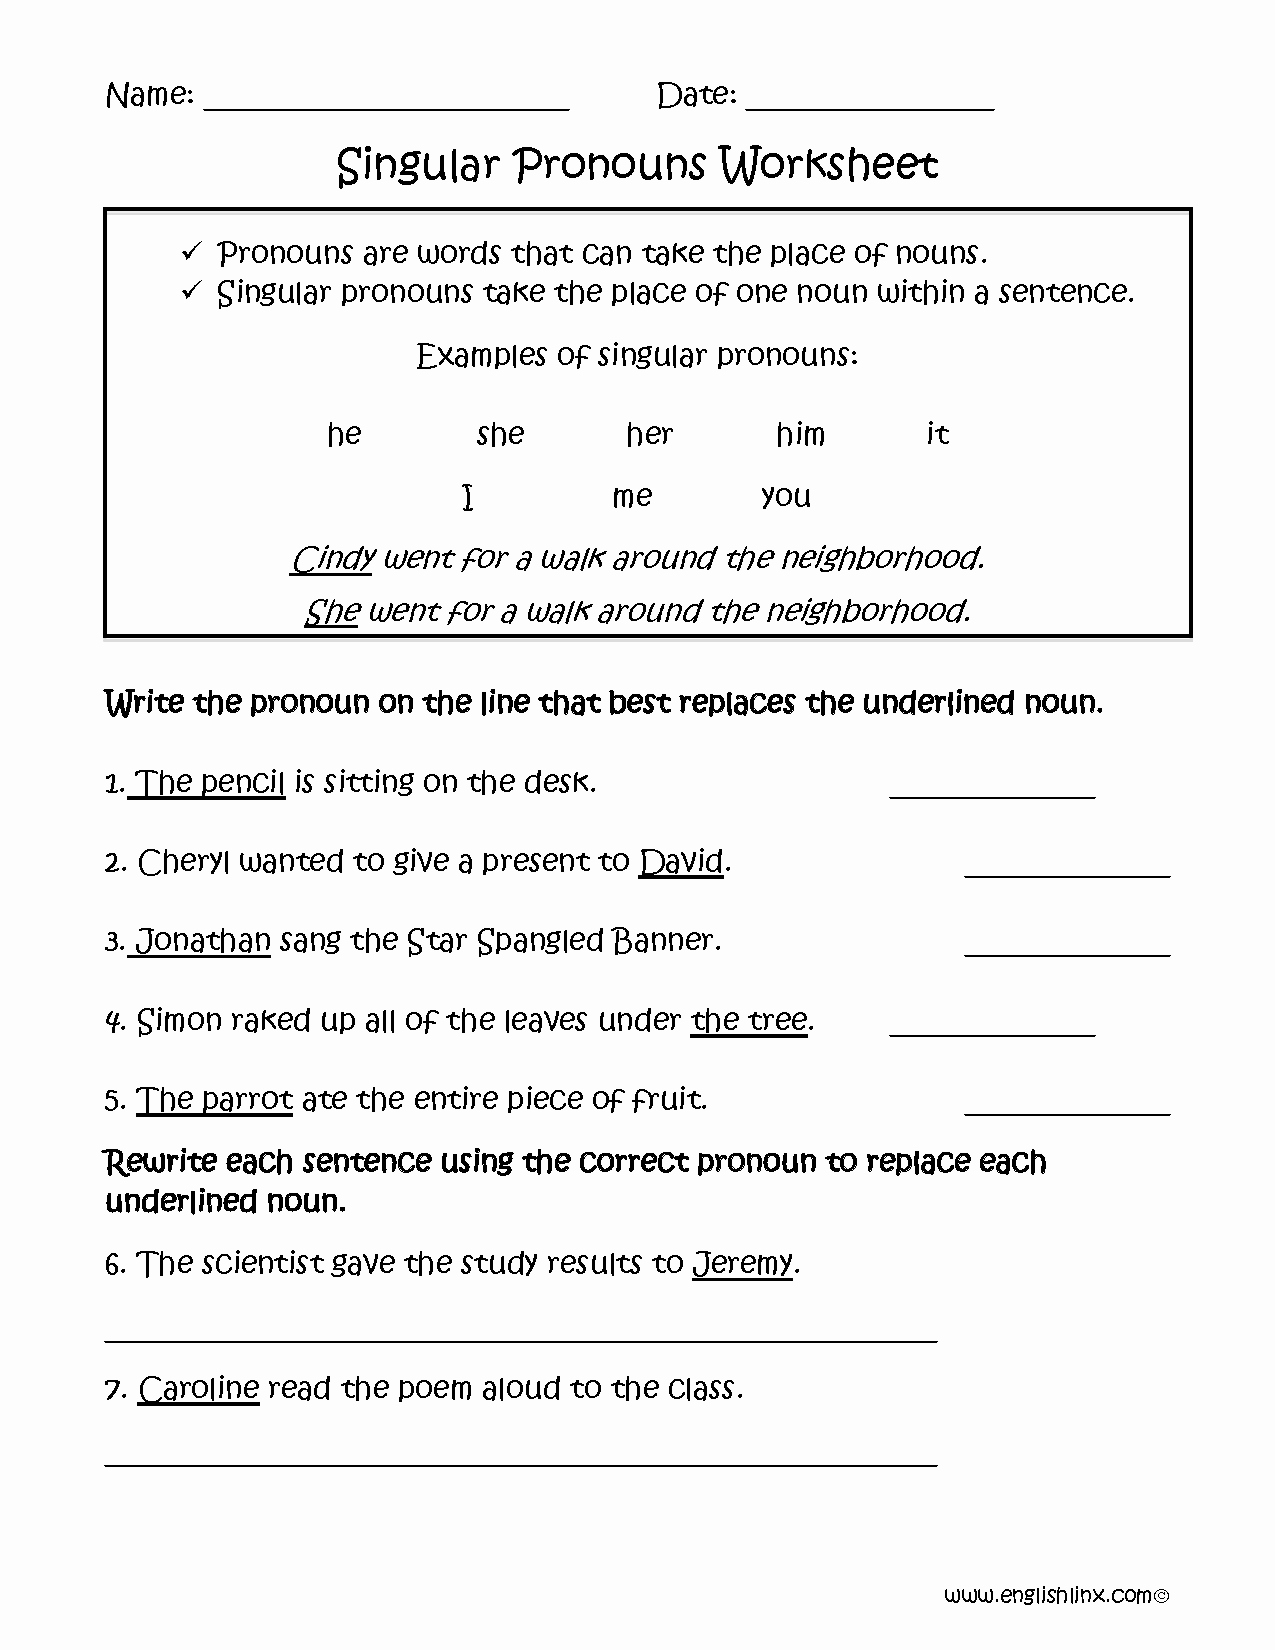 Pronoun Verb Agreement Worksheet New Pronouns Worksheets